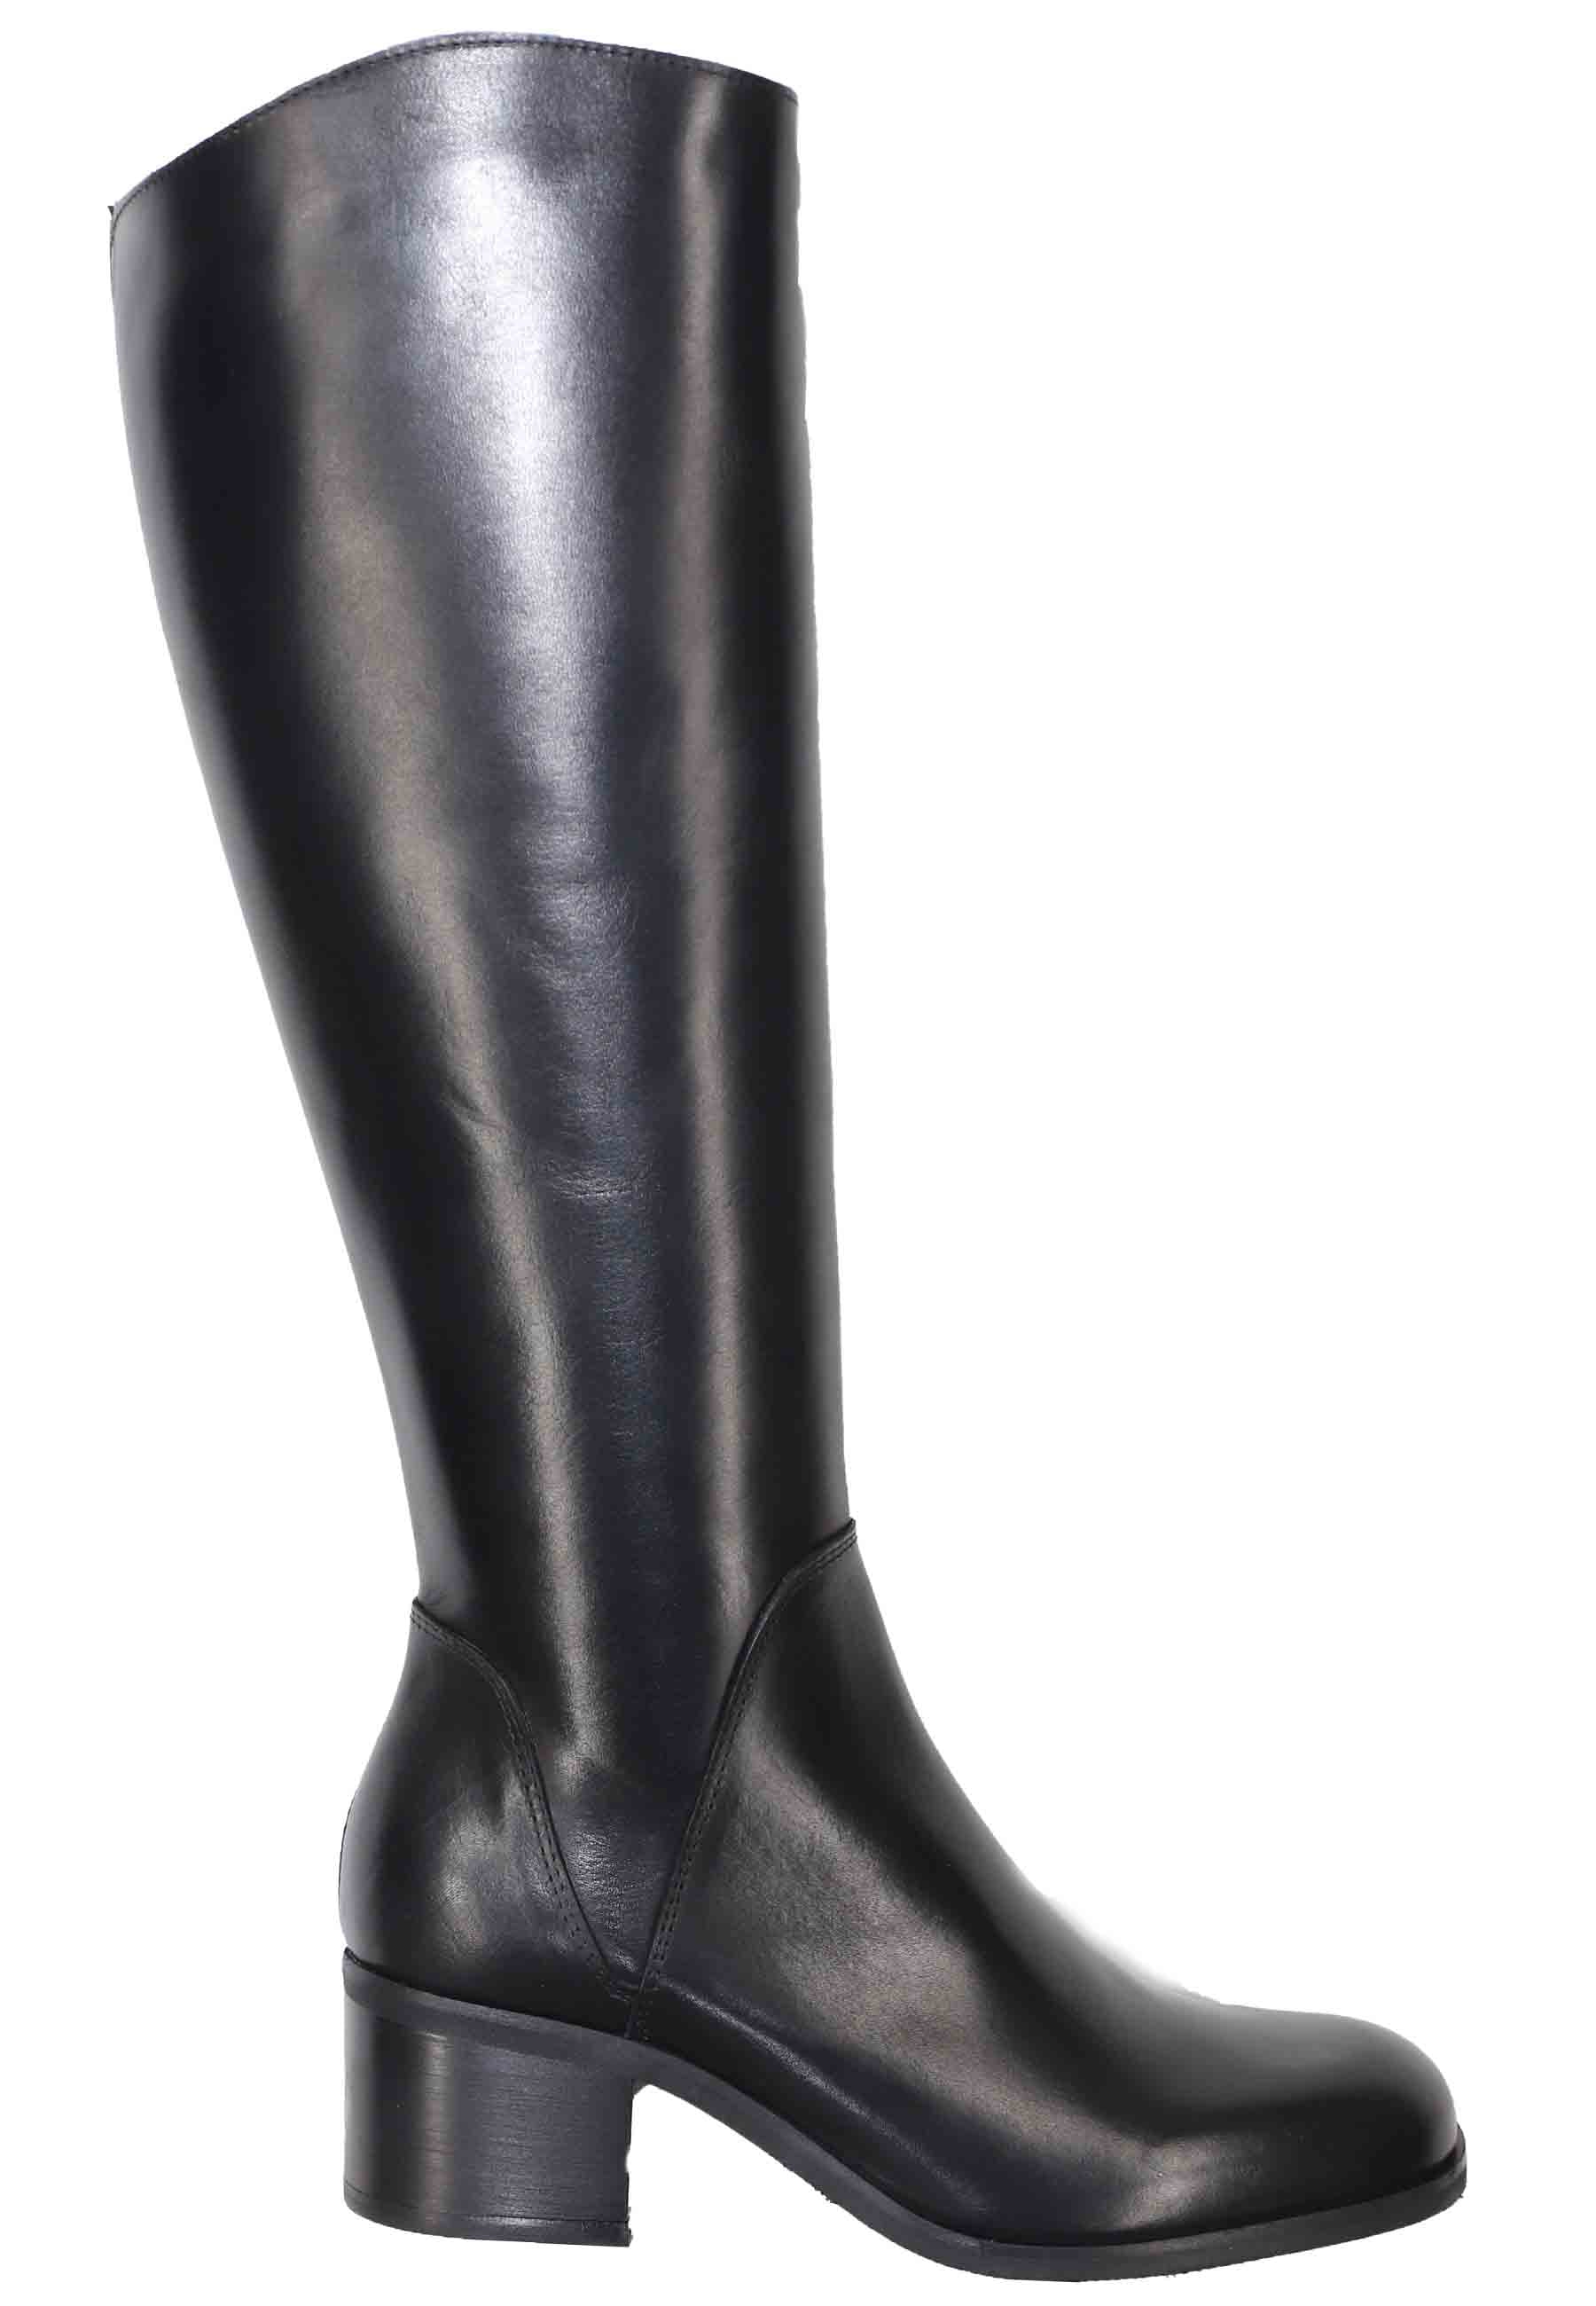 Boots femme en cuir noir à talons en cuir